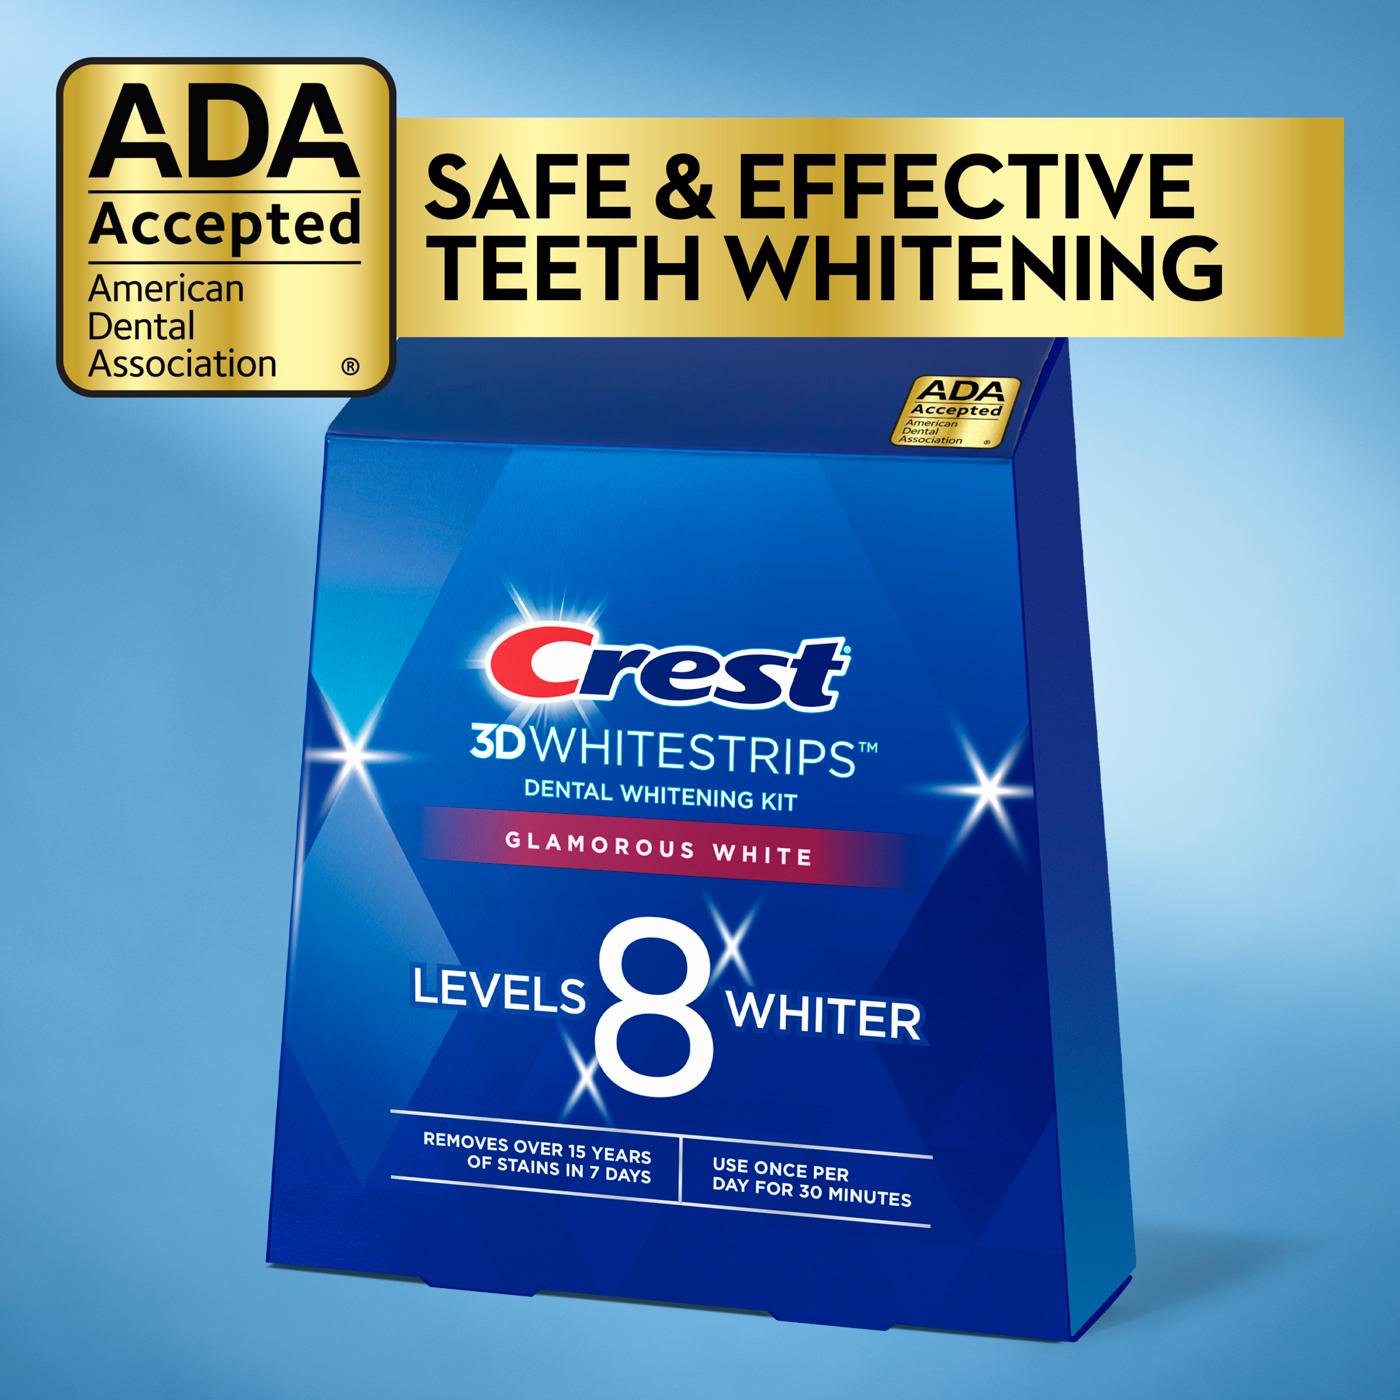 Crest 3DWhitestrips Dental Whitening Kit - Glamorous White; image 6 of 8